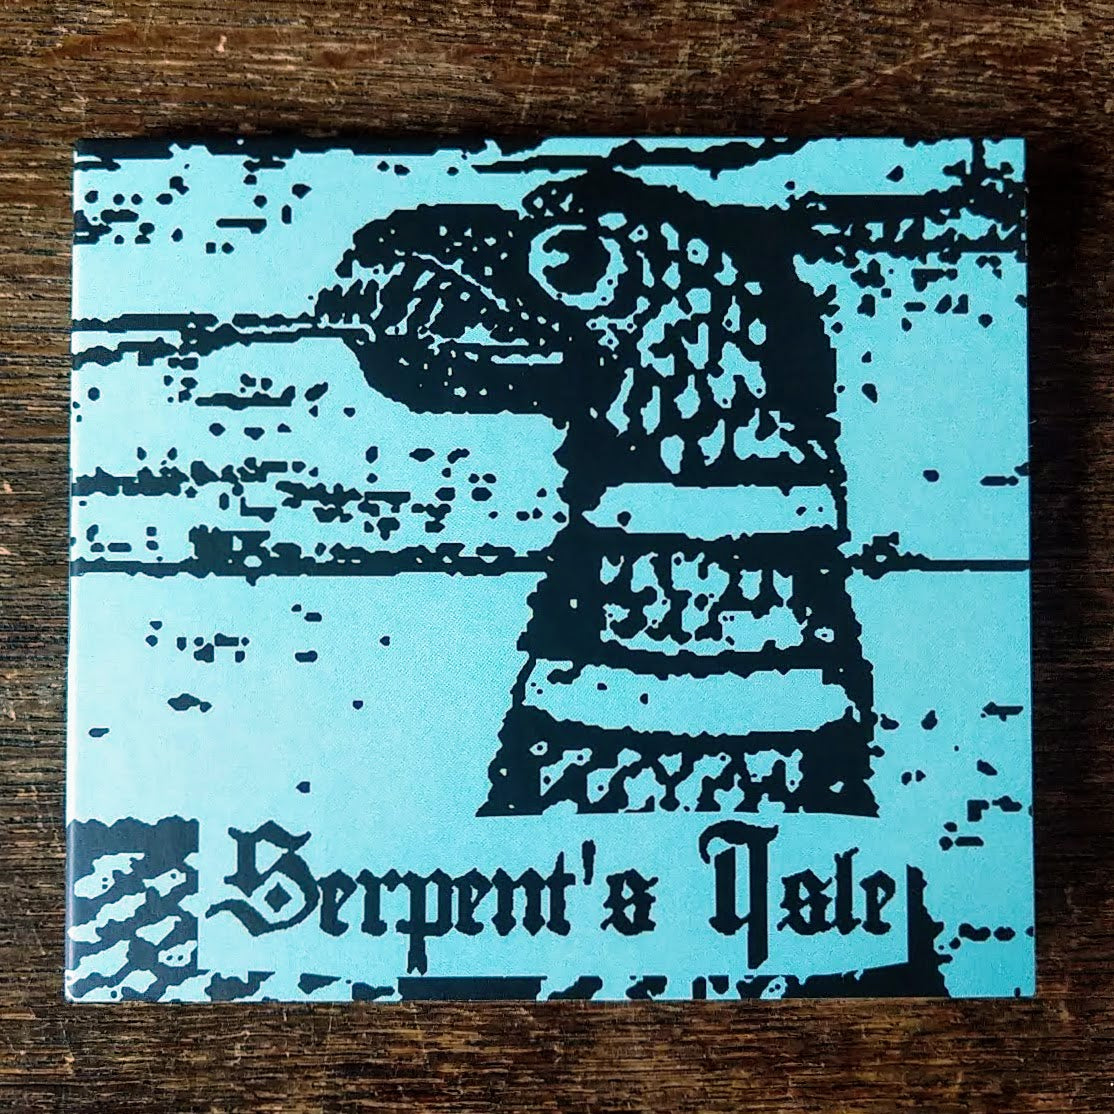 Serpent's Isle - s/t [CD]